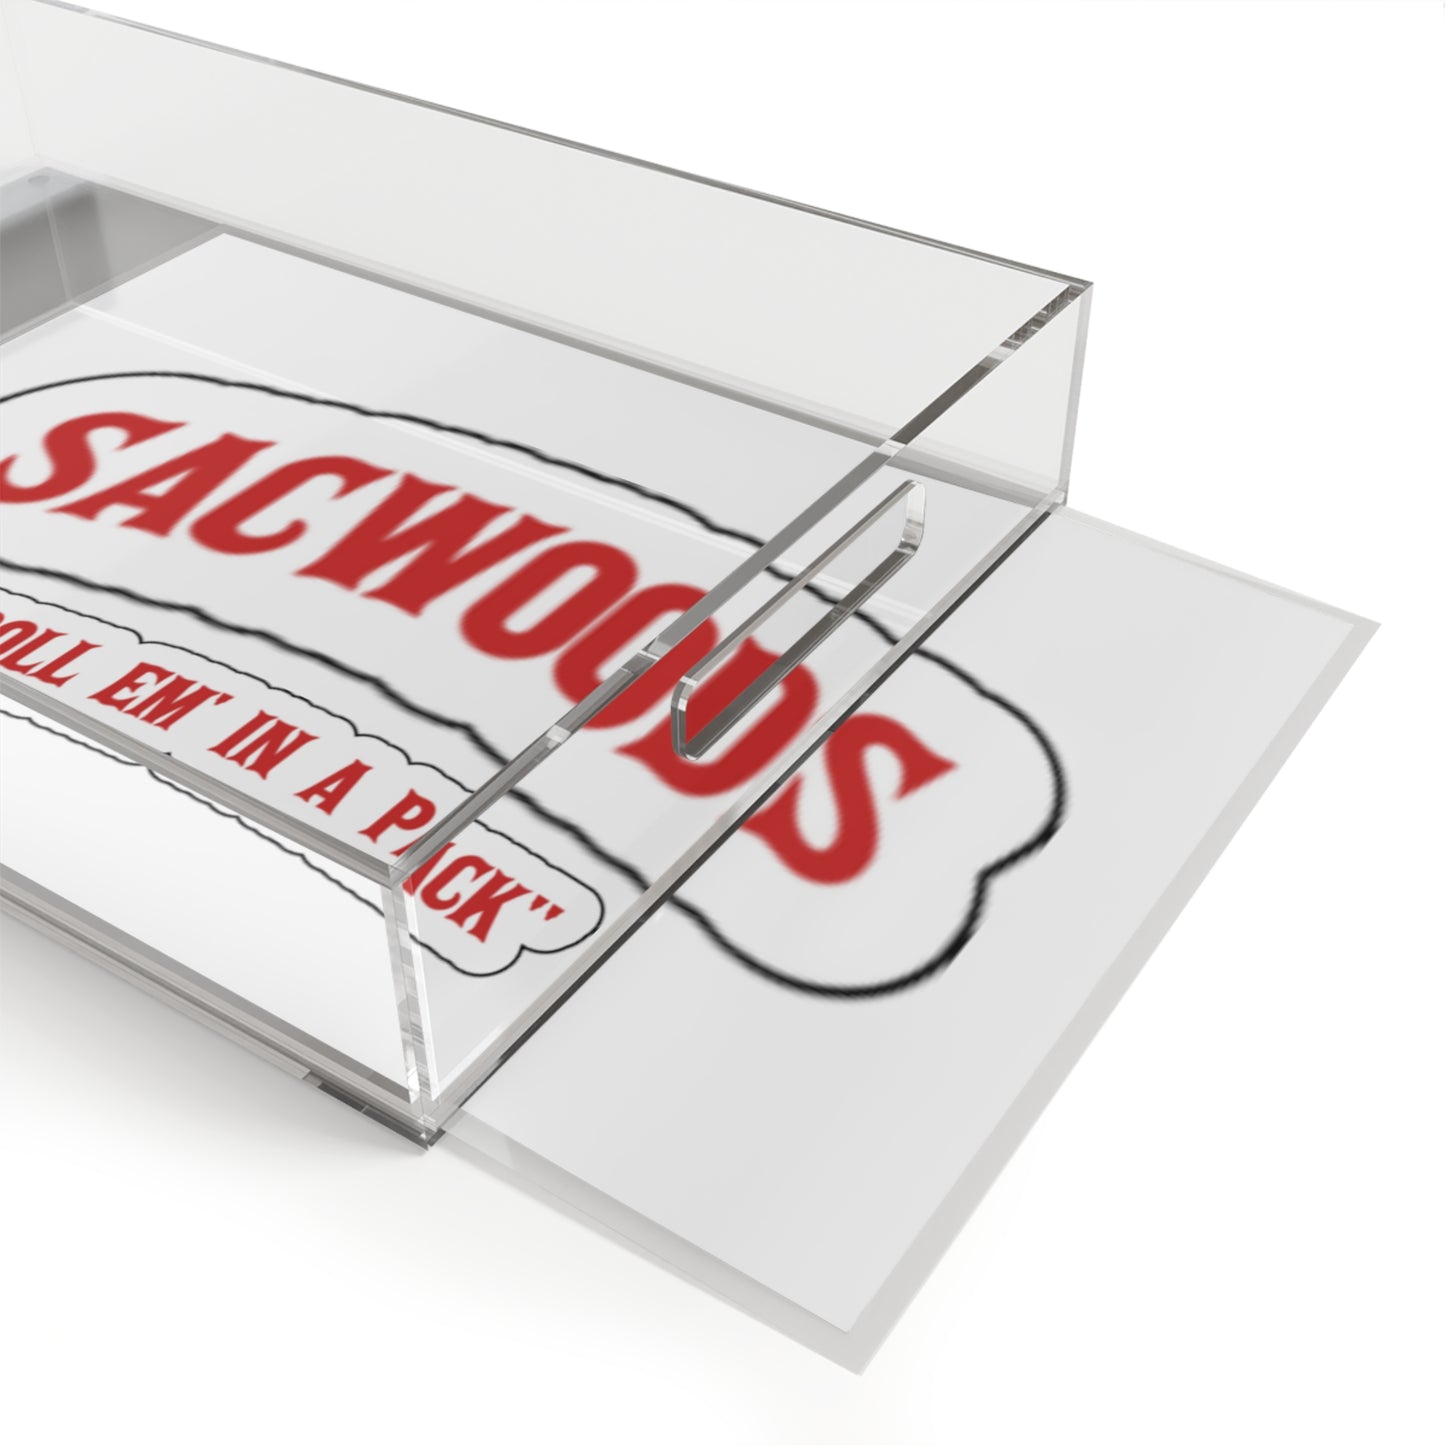 ATZ Sacwoods Acrylic Smoking Tray